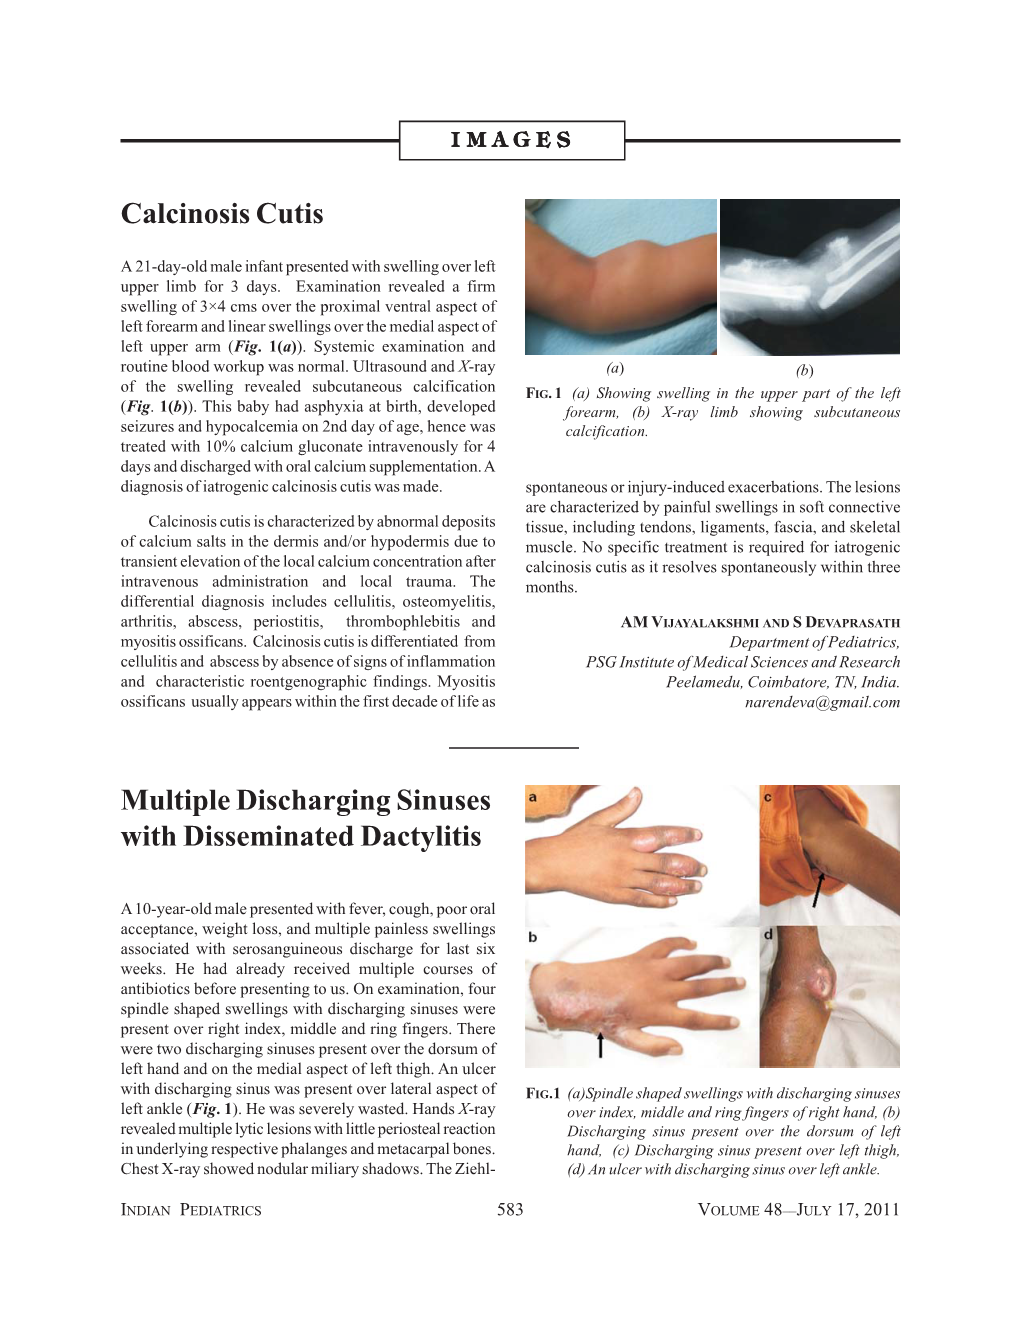 Calcinosis Cutis Multiple Discharging Sinuses with Disseminated Dactylitis